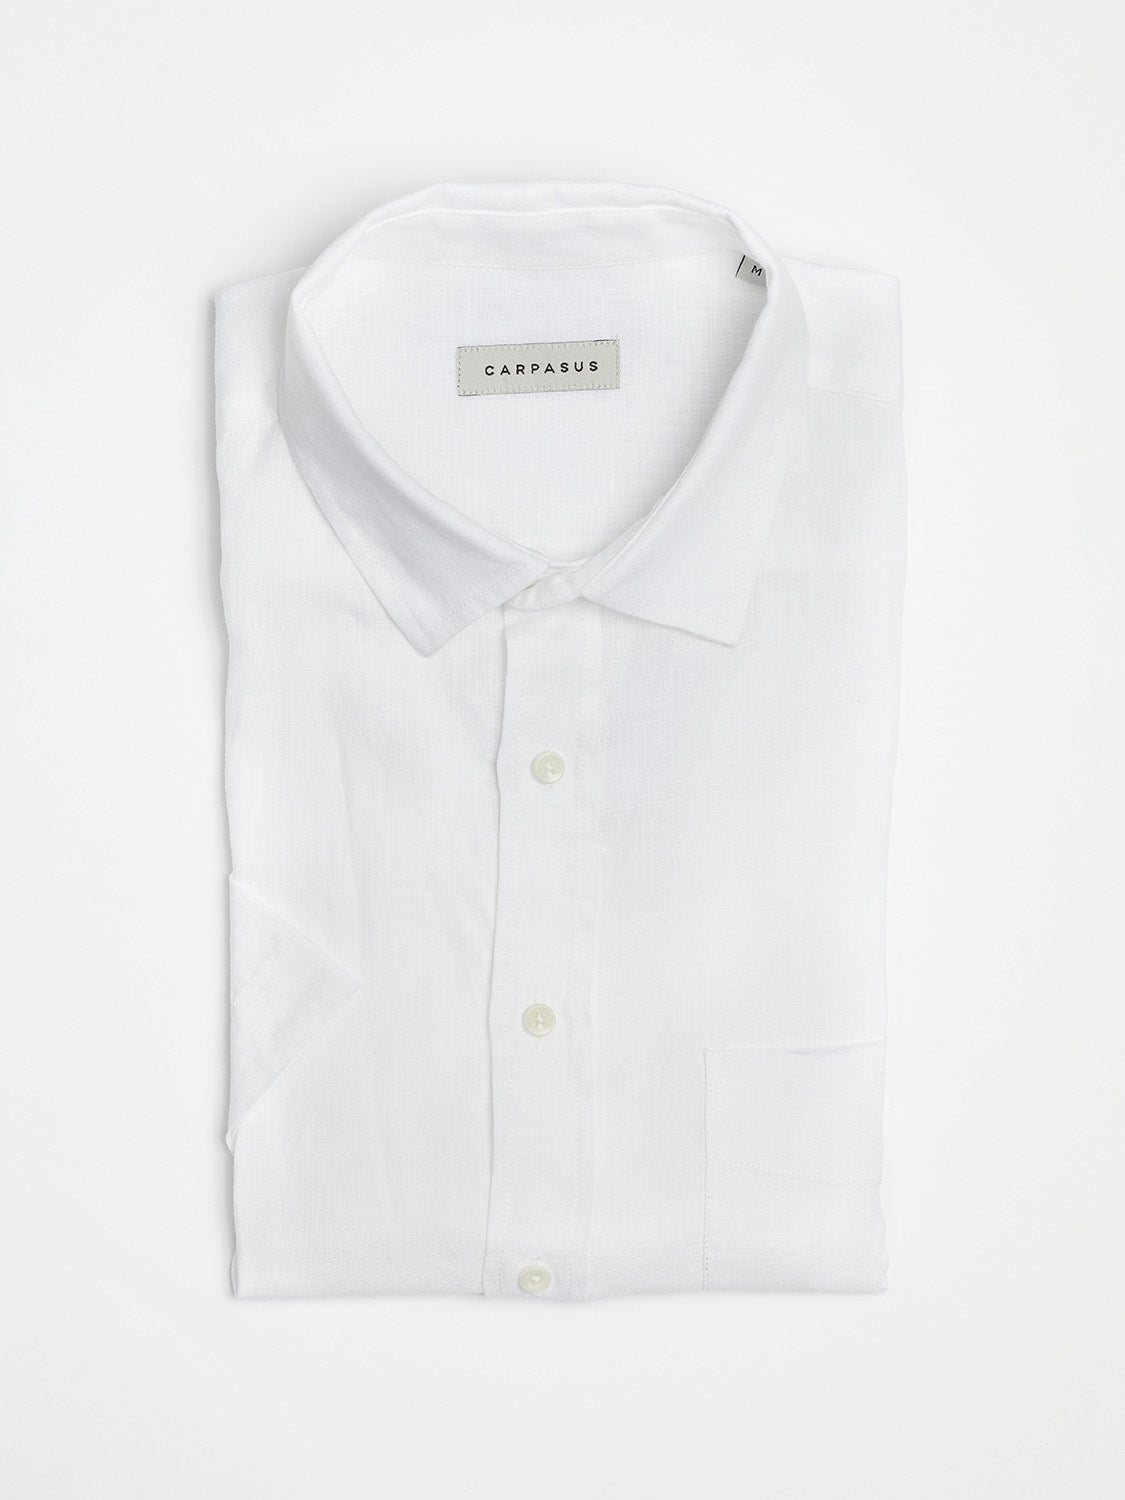 Sustainable Short Sleeve Linen Shirt White - Lido CARPASUS Store Online